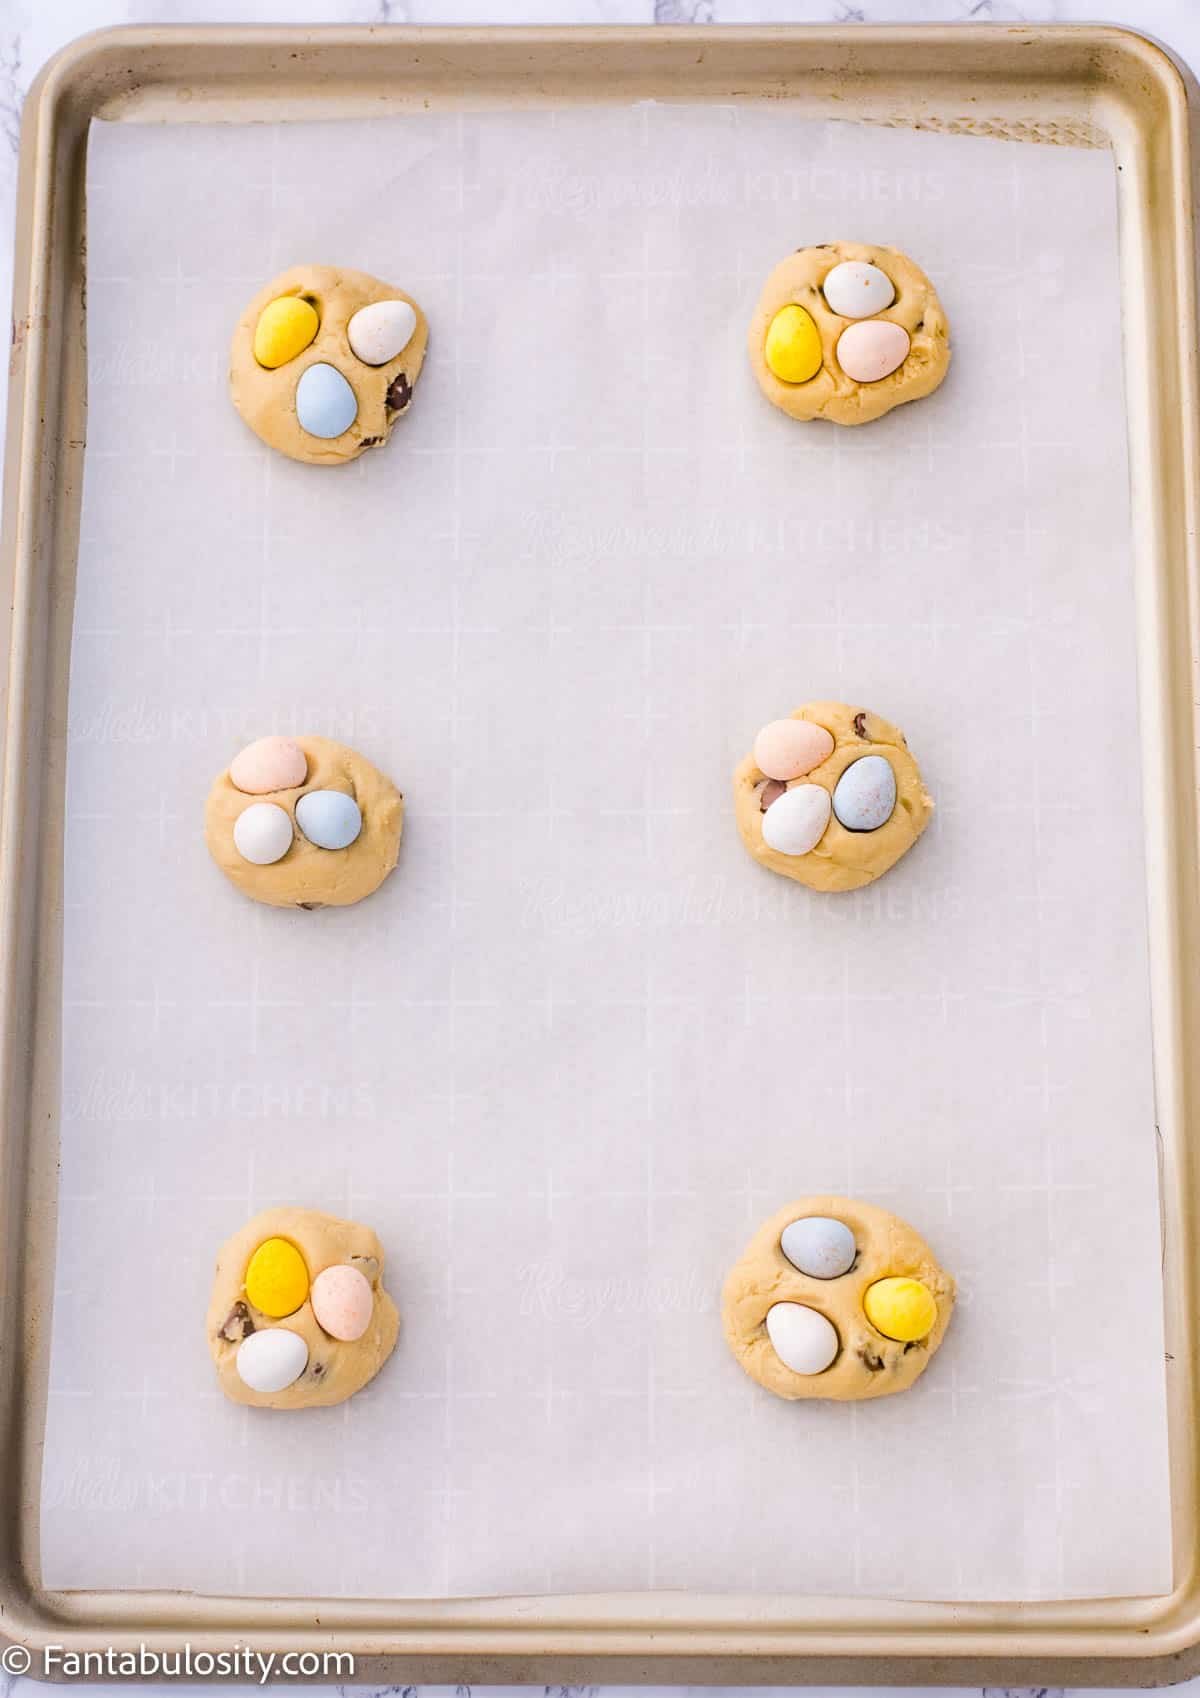 Cookie dough balls with Cadbury mini eggs